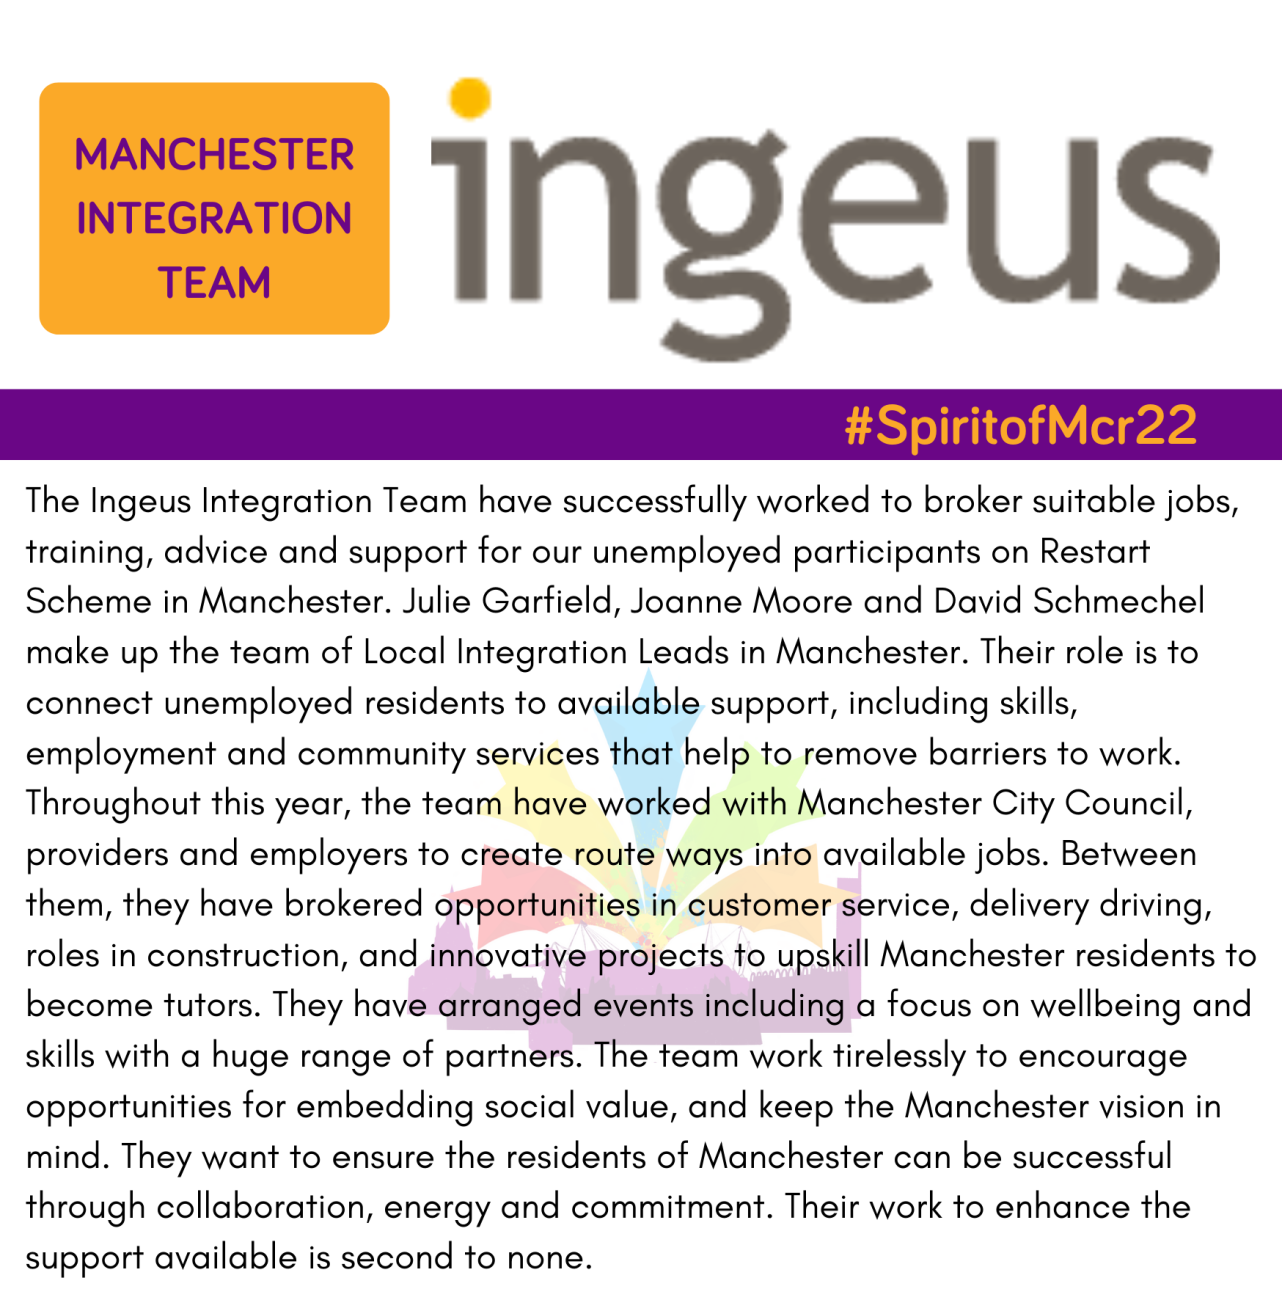 Manchester Integration Team